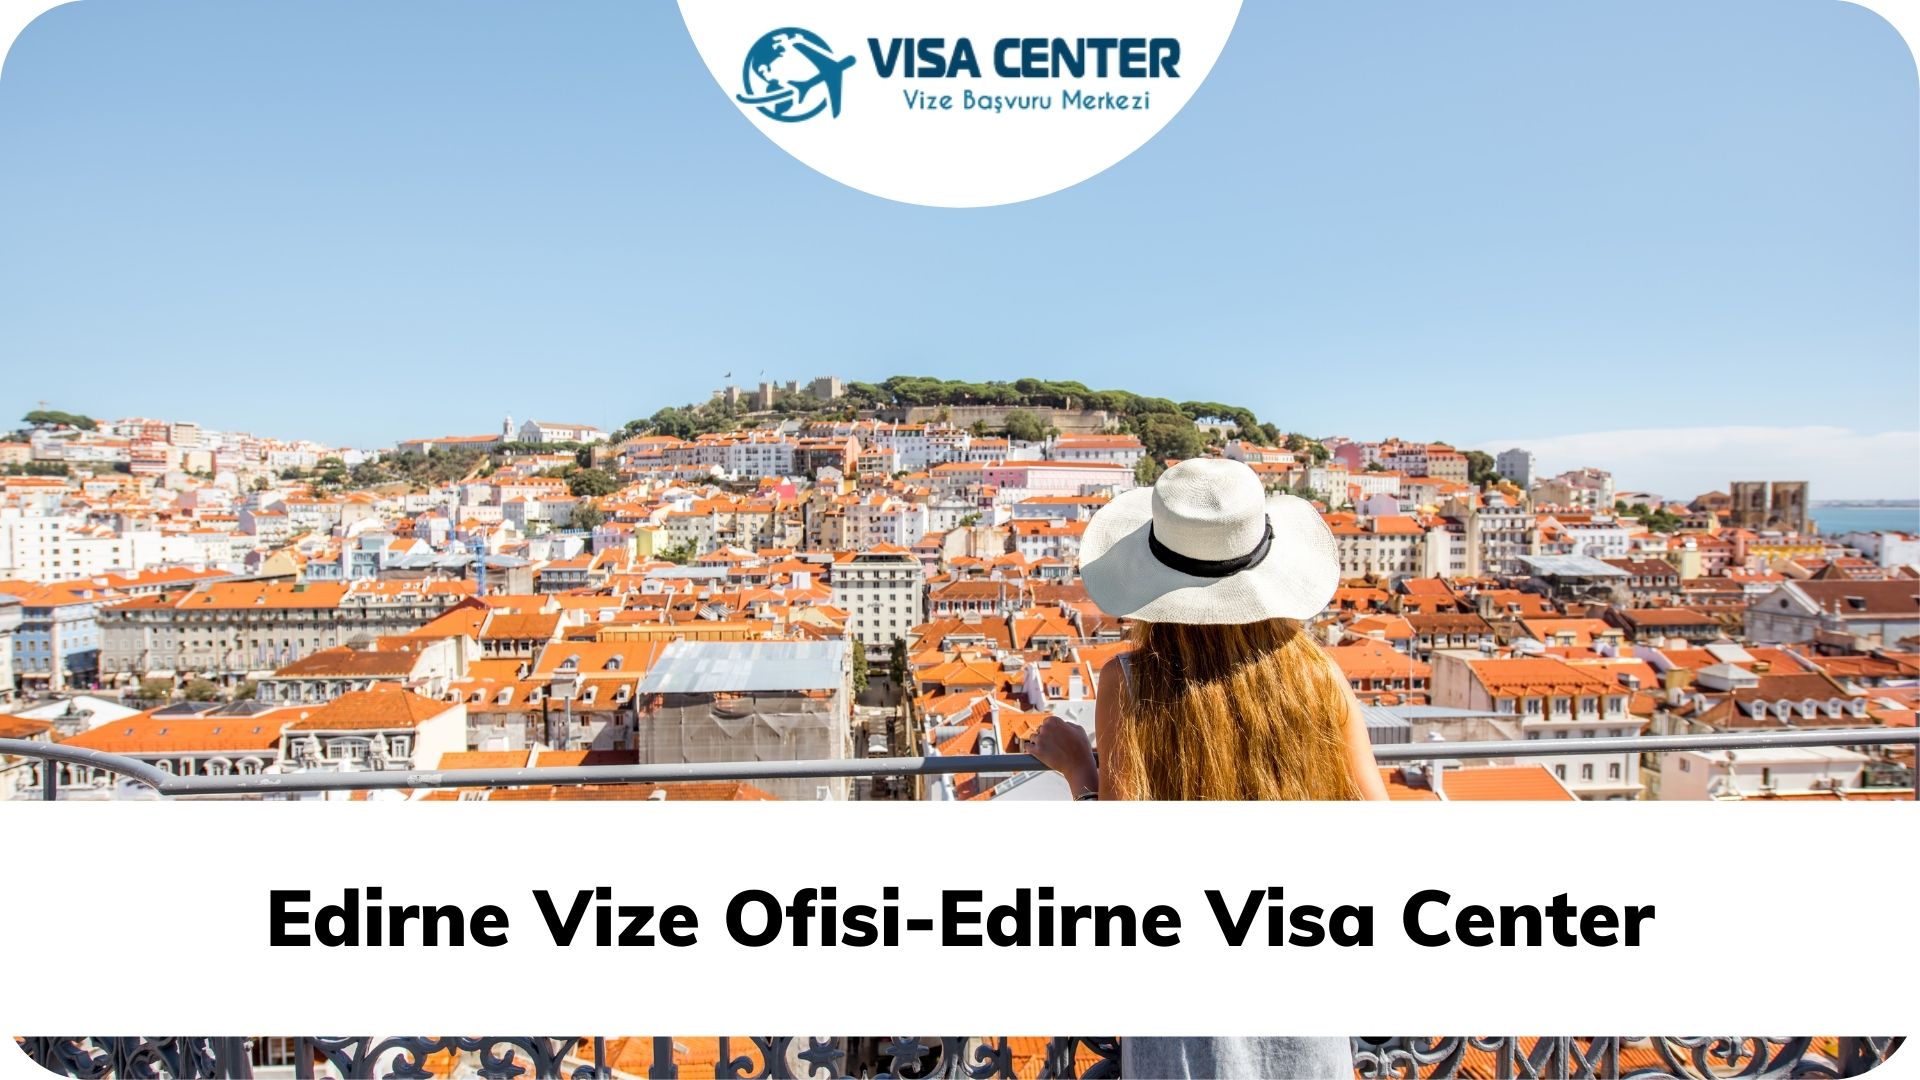 Edirne Vize Ofisi-Edirne Visa Center